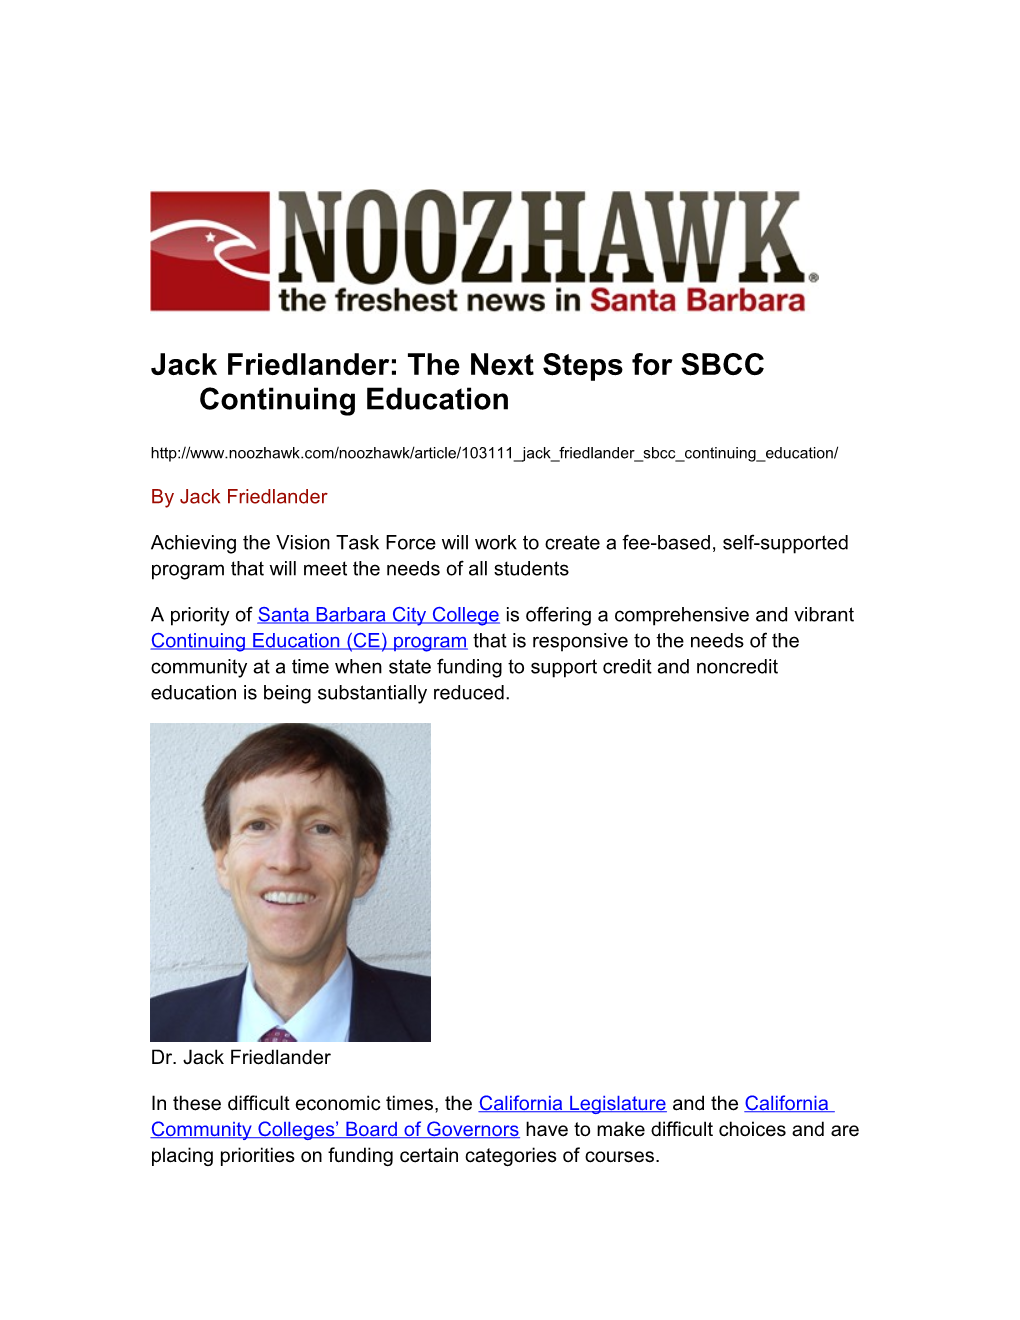 Jack Friedlander: the Next Steps for SBCC Continuing Education